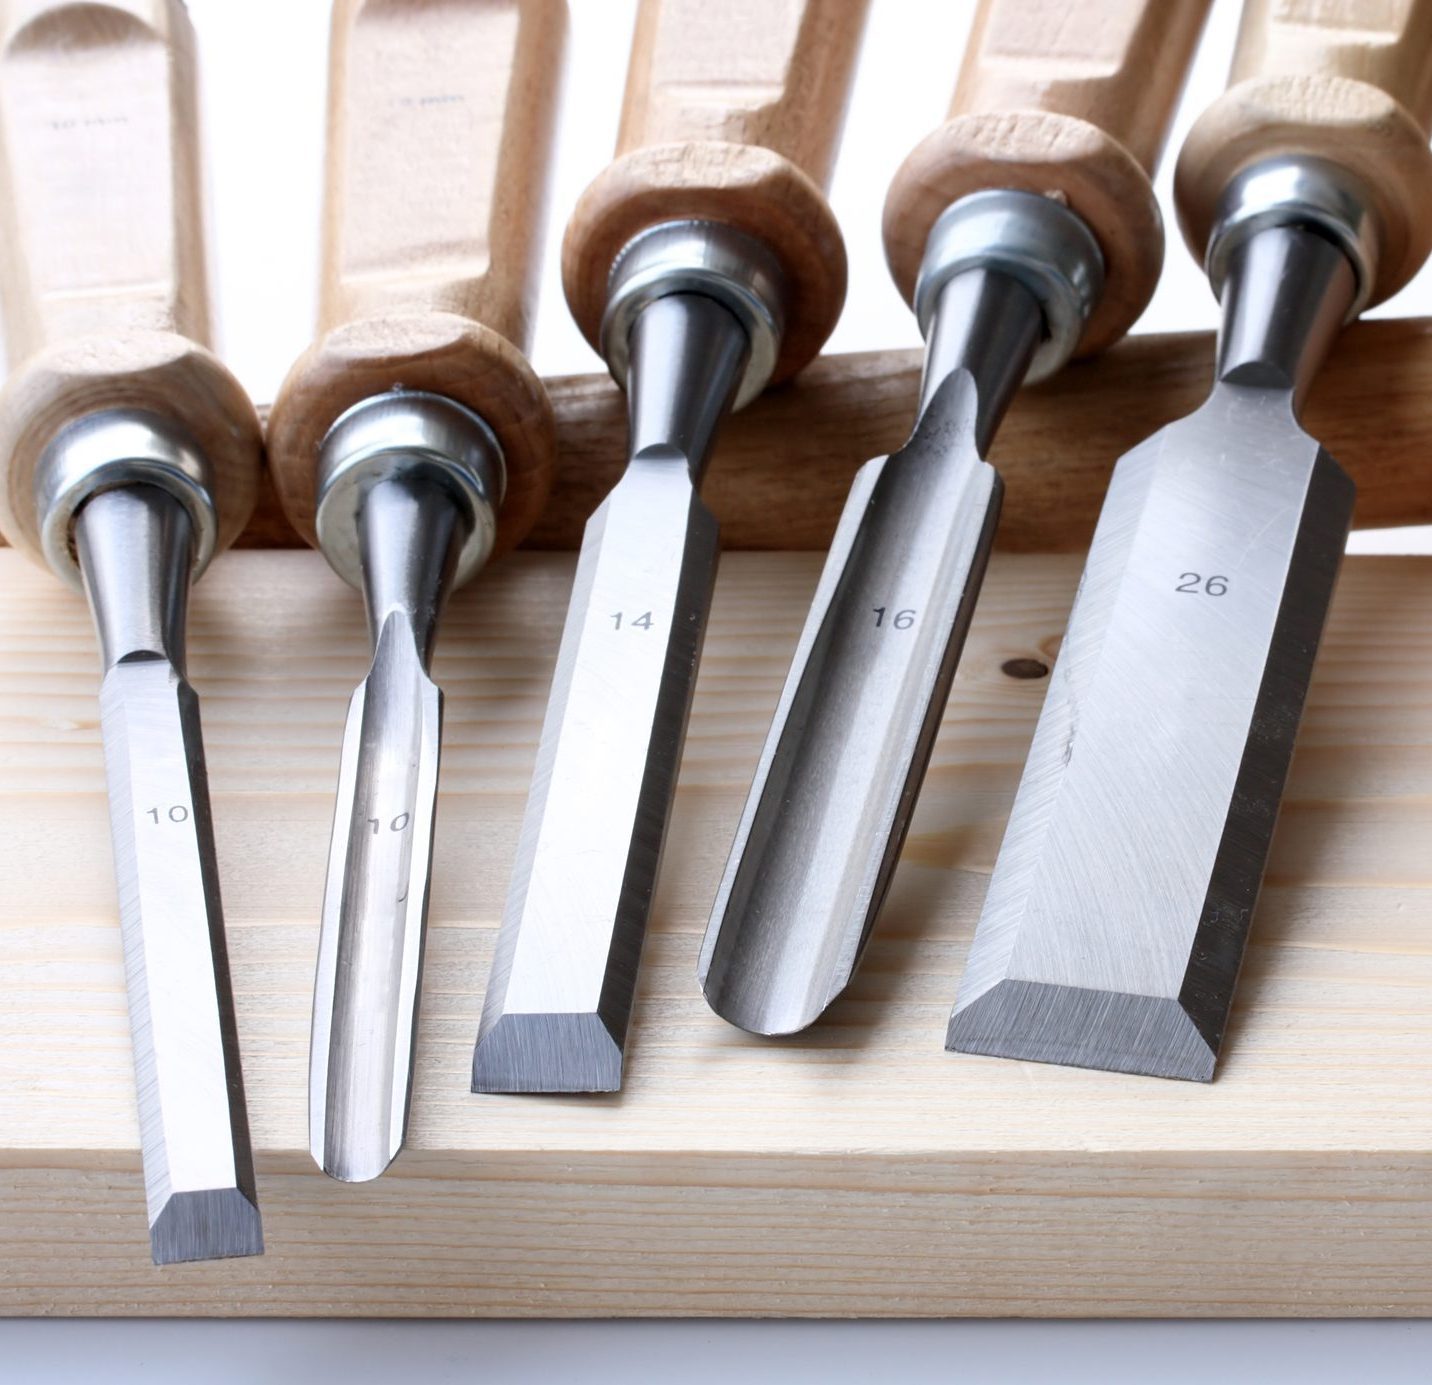 7 Basic Woodturning Tools To Start With